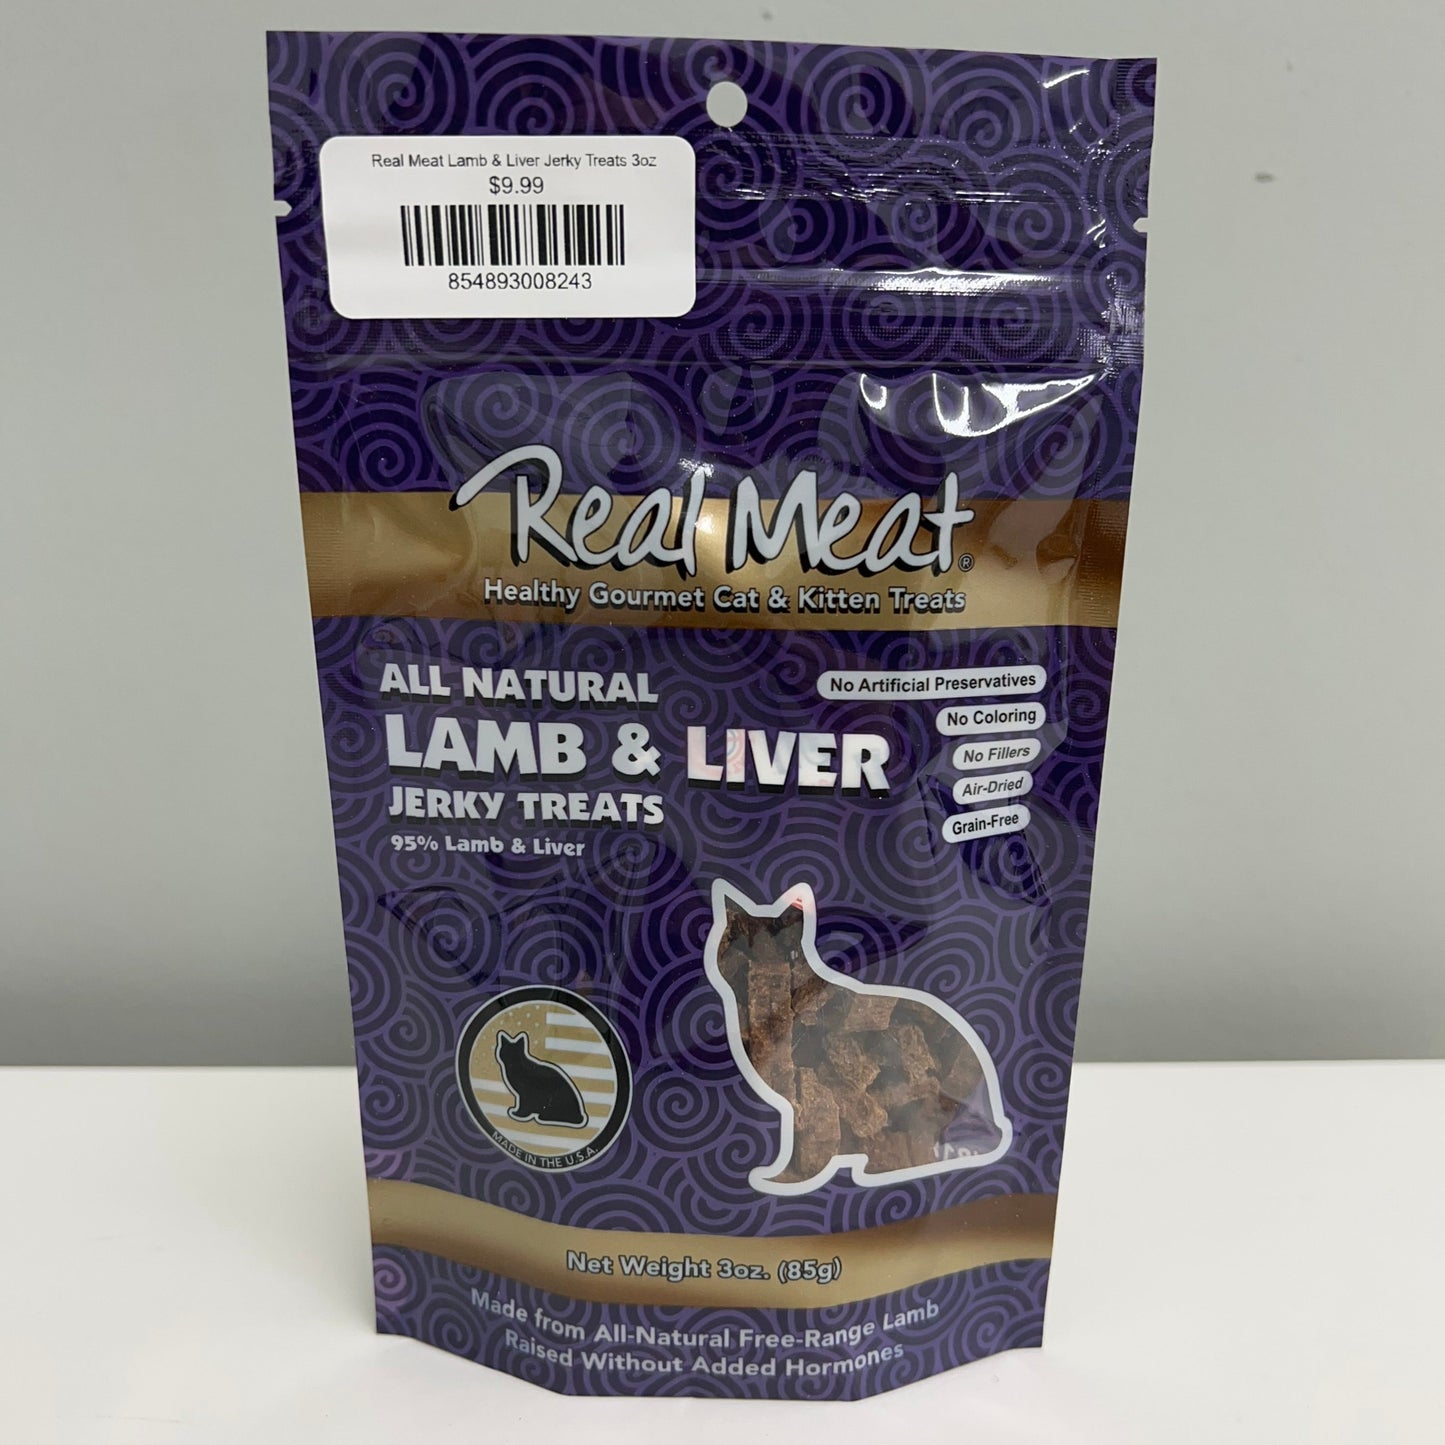 Real Meat Lamb & Liver Jerky Treats 3oz